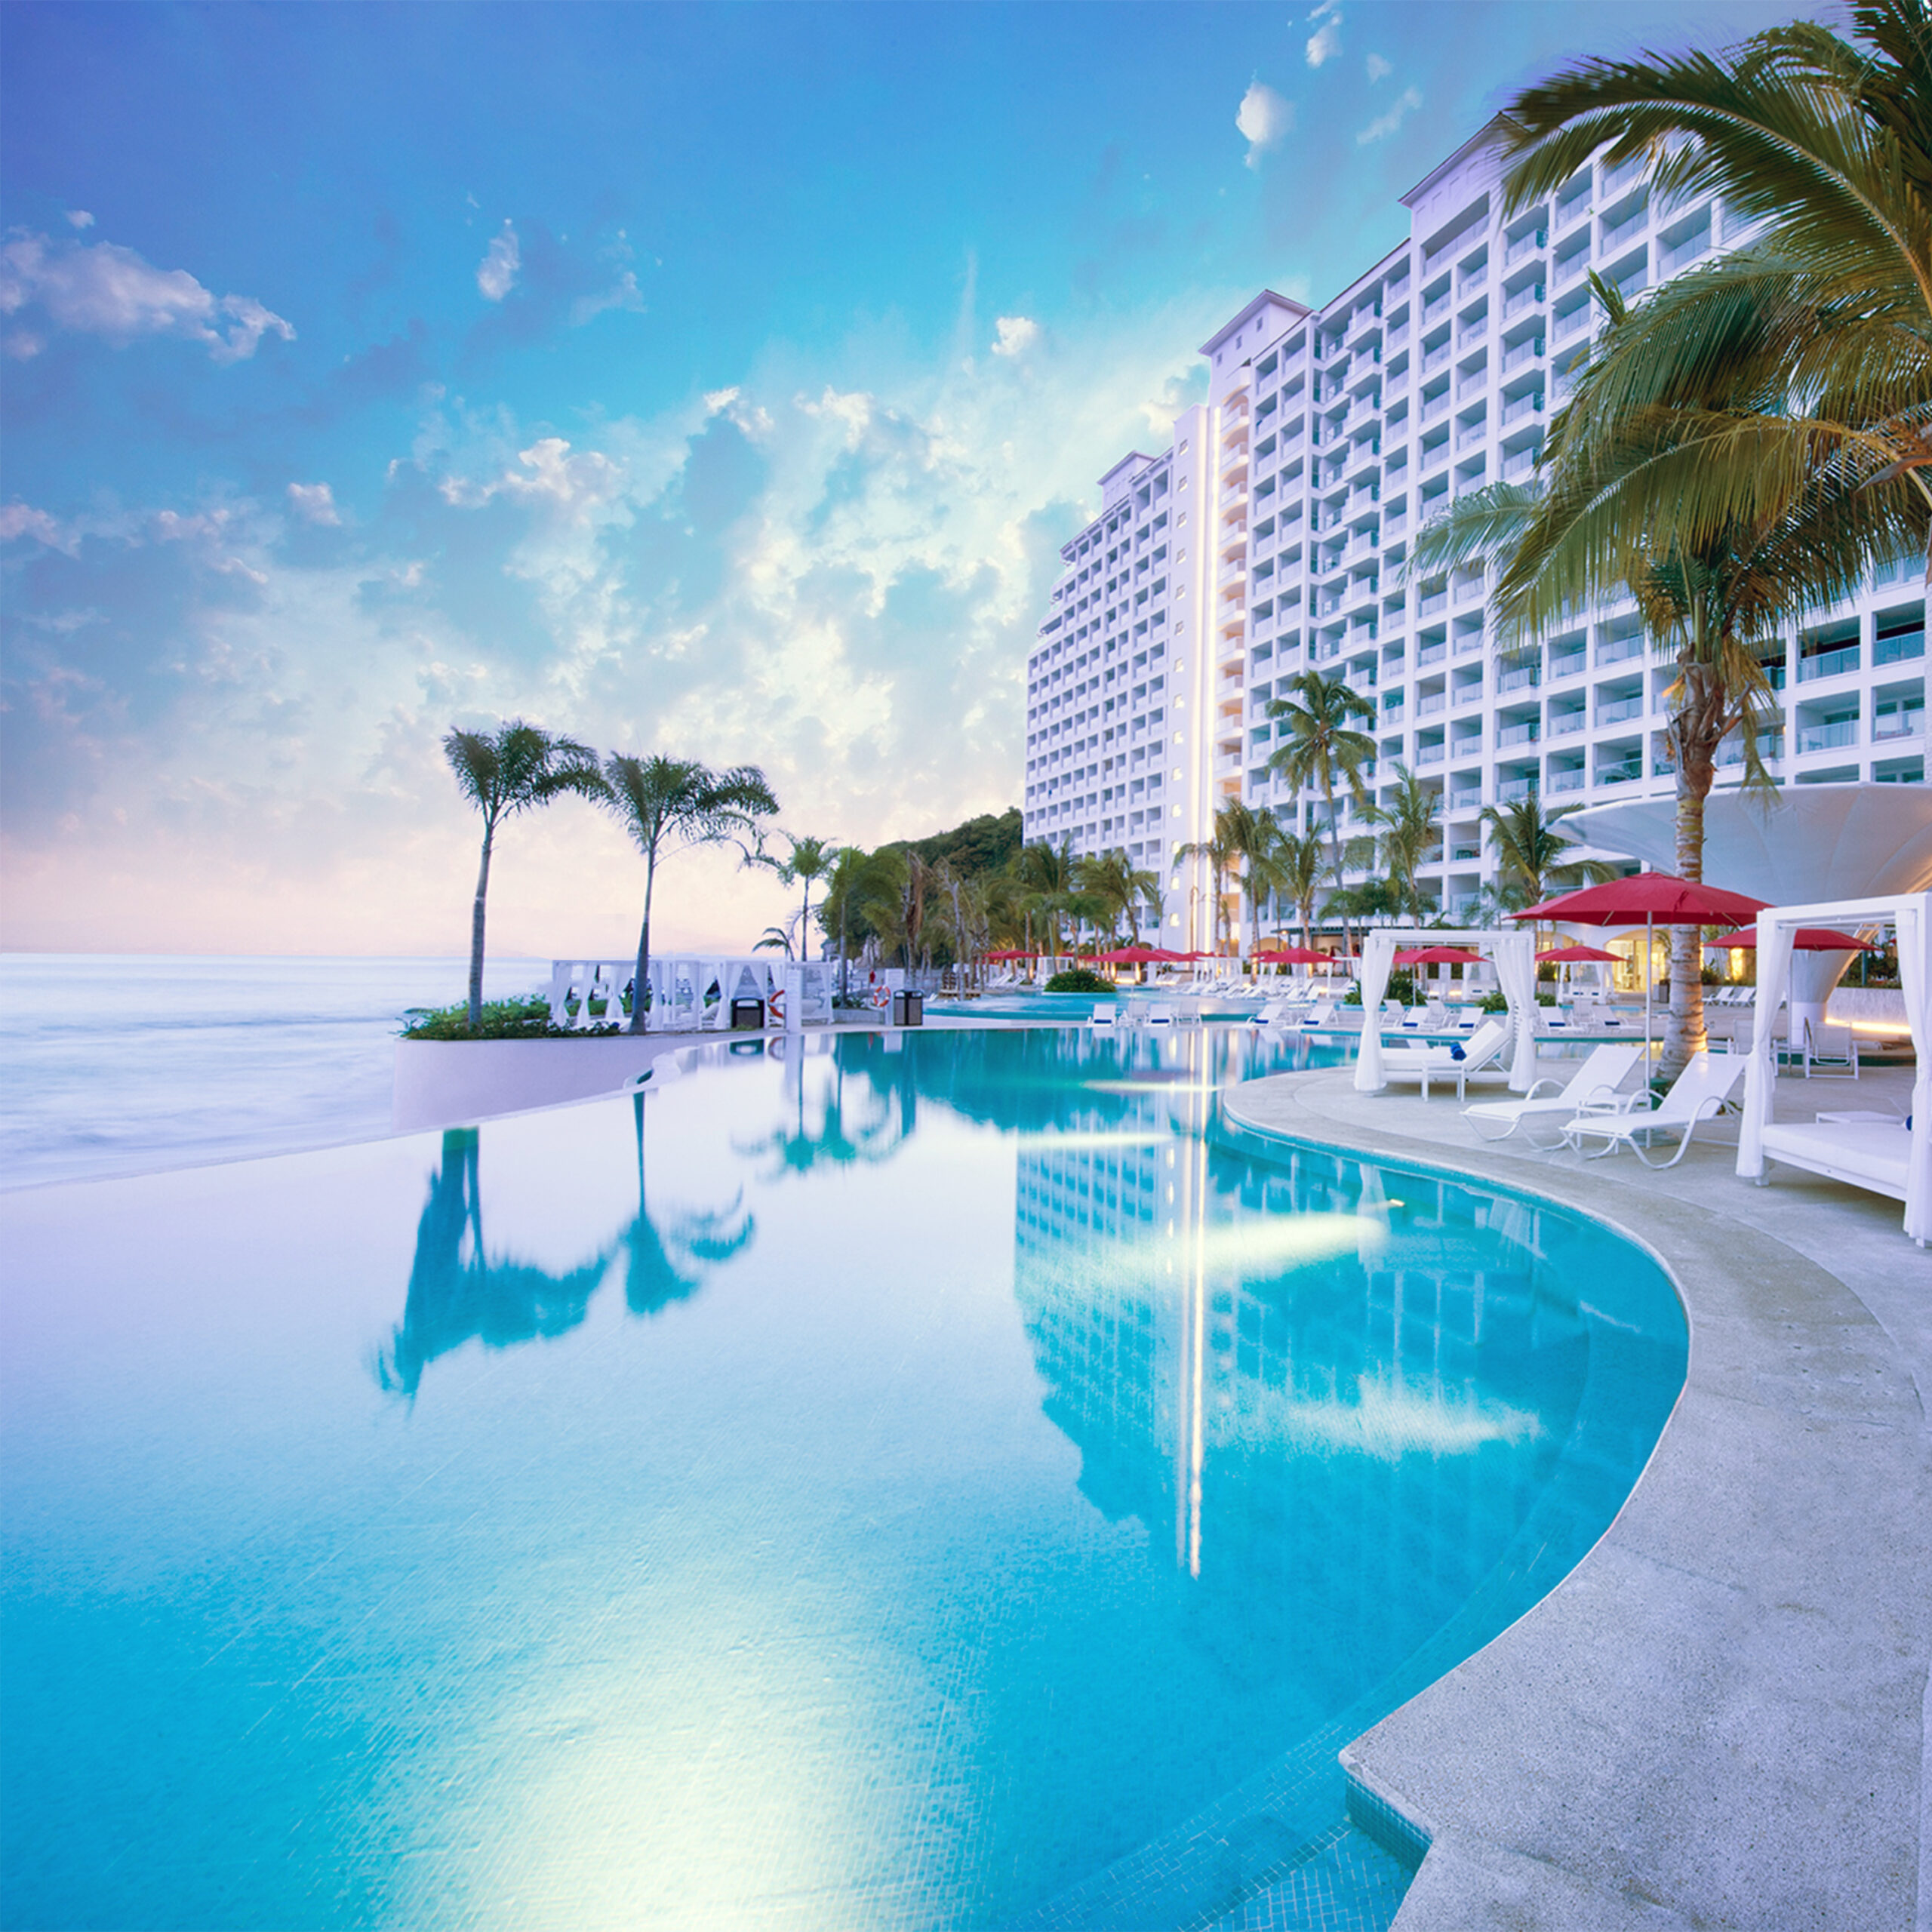 Hilton Opens New All-Inclusive Resort in Puerto Vallarta